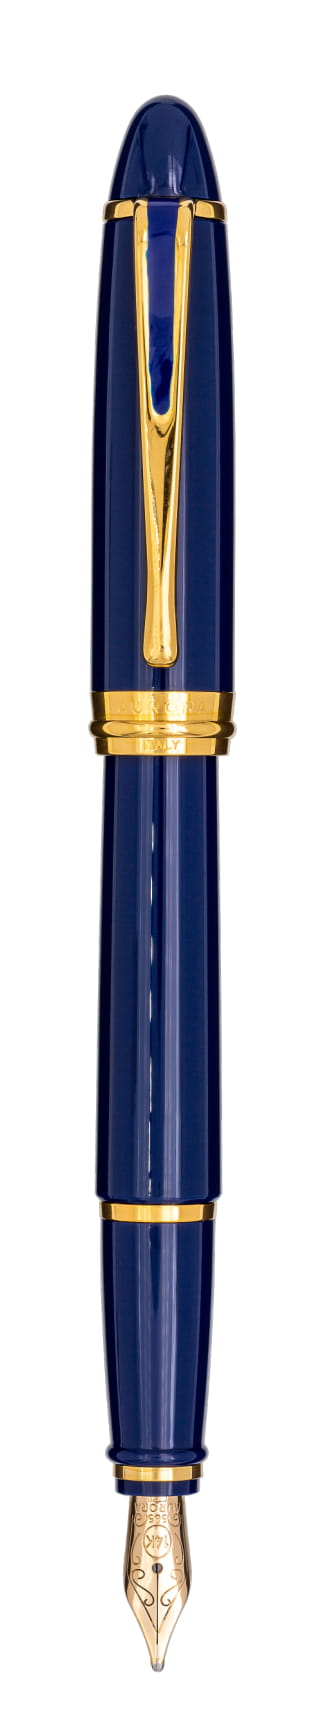 Aurora Ipsilon Deluxe Blue with Gold Trims Fountain Pen